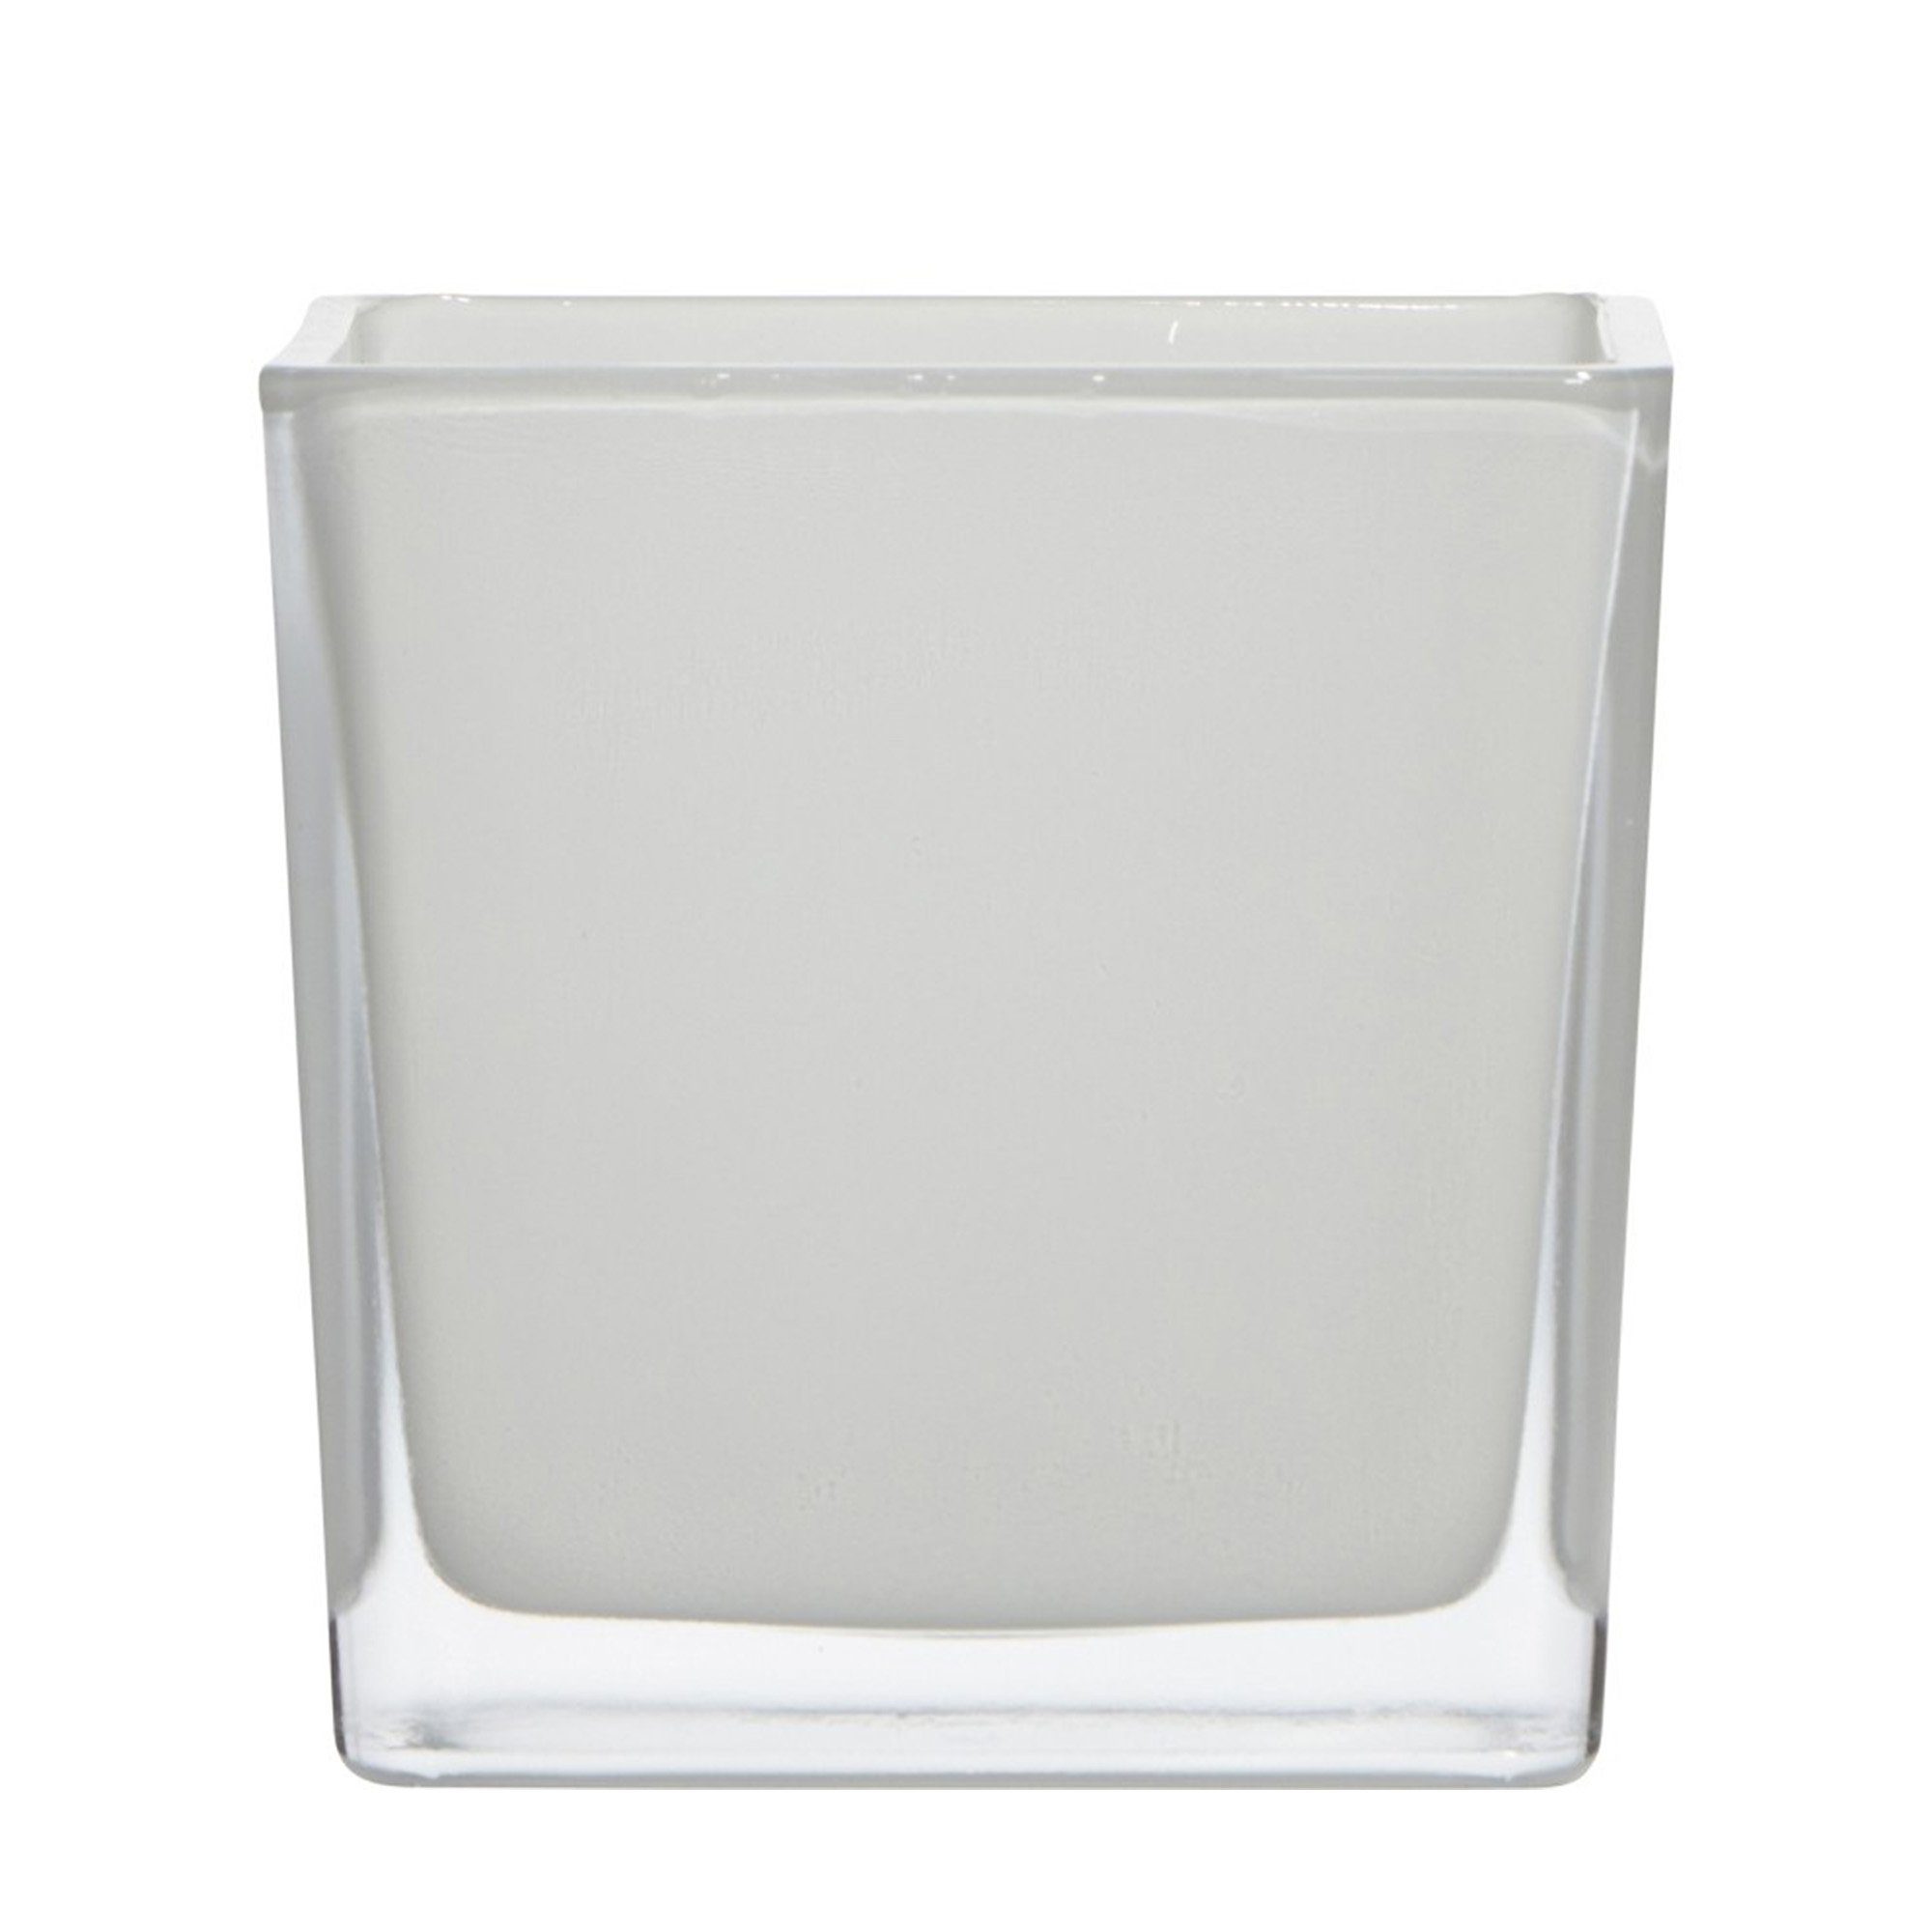 markenlose Dekovase Glasvase x 8cm Quadratisch x8 klar transparent Cubic 8